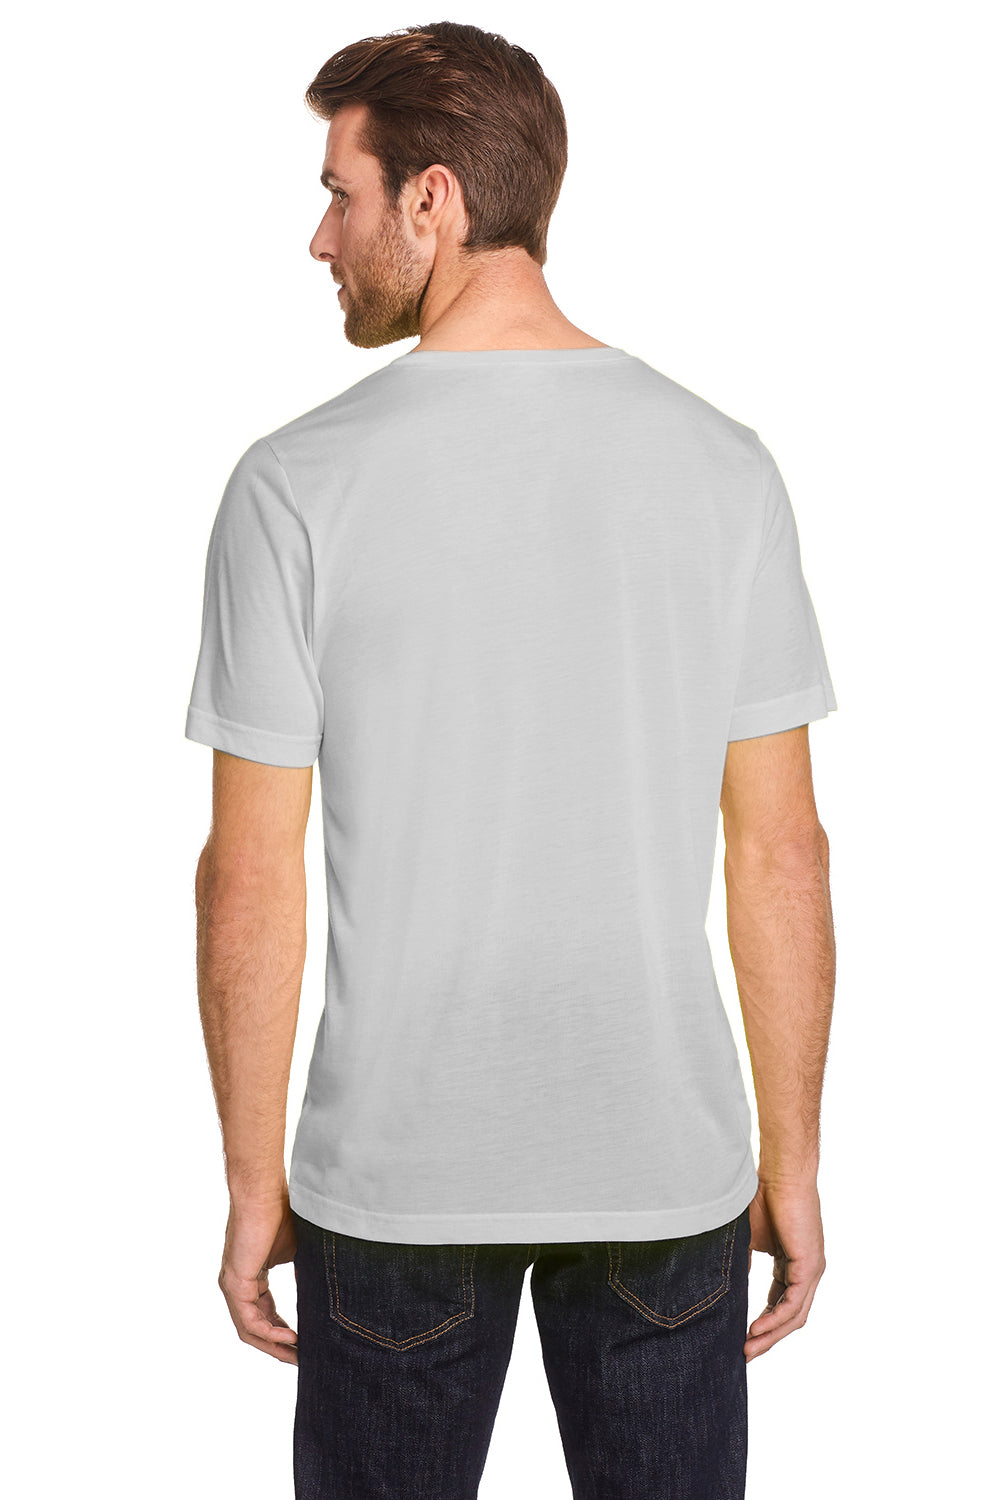 Core 365 CE111 Mens Fusion ChromaSoft Performance Moisture Wicking Short Sleeve Crewneck T-Shirt Platinum Grey Back